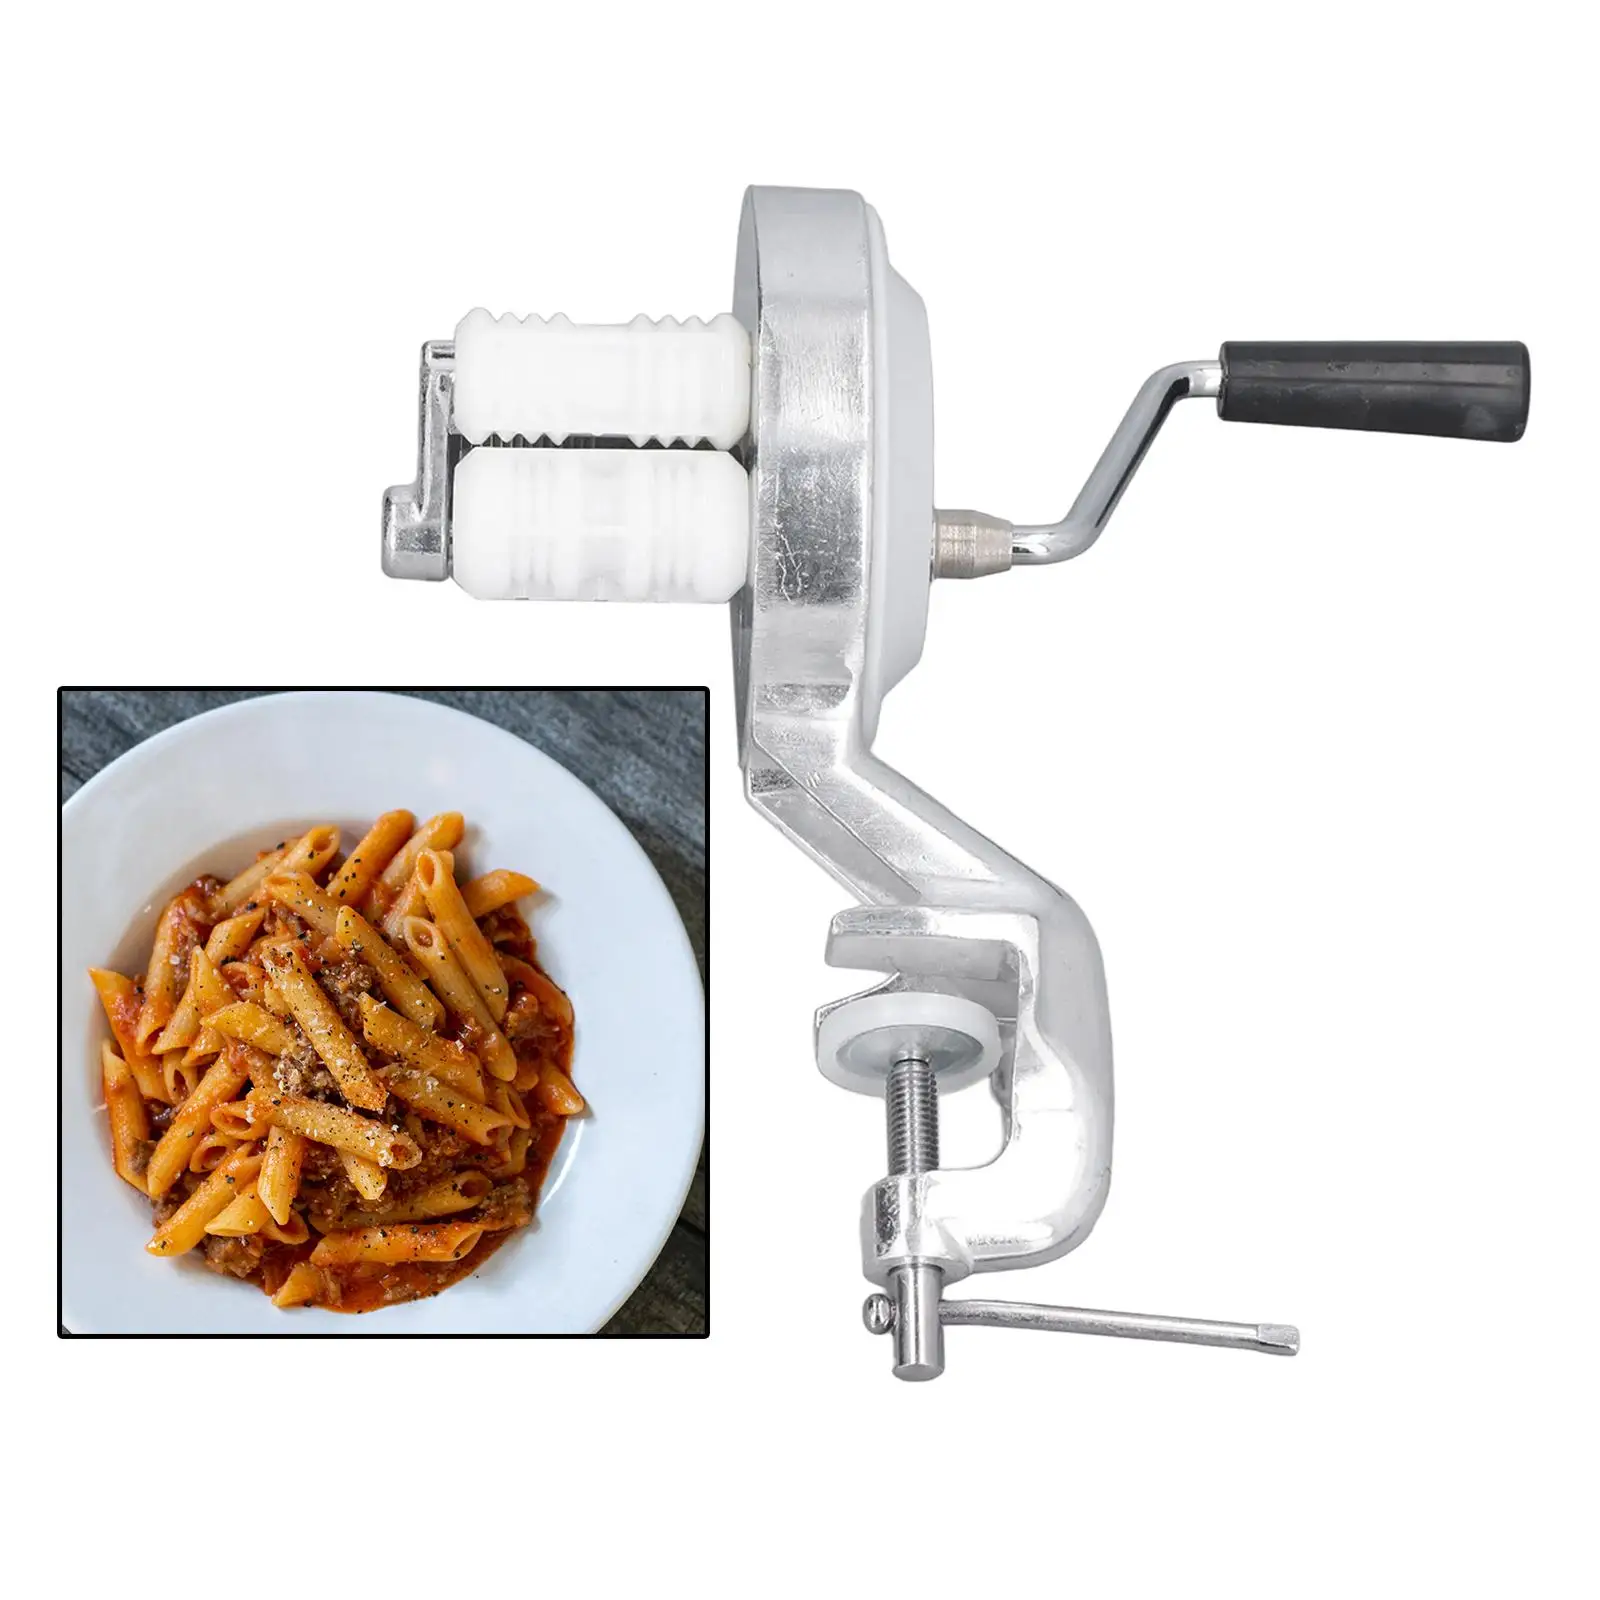 Handmade Spaghetti Maker Manual Noodle Maker Kitchen Food Making Equipment for Fettuccine Kitchen Spaghetti Home Noodles